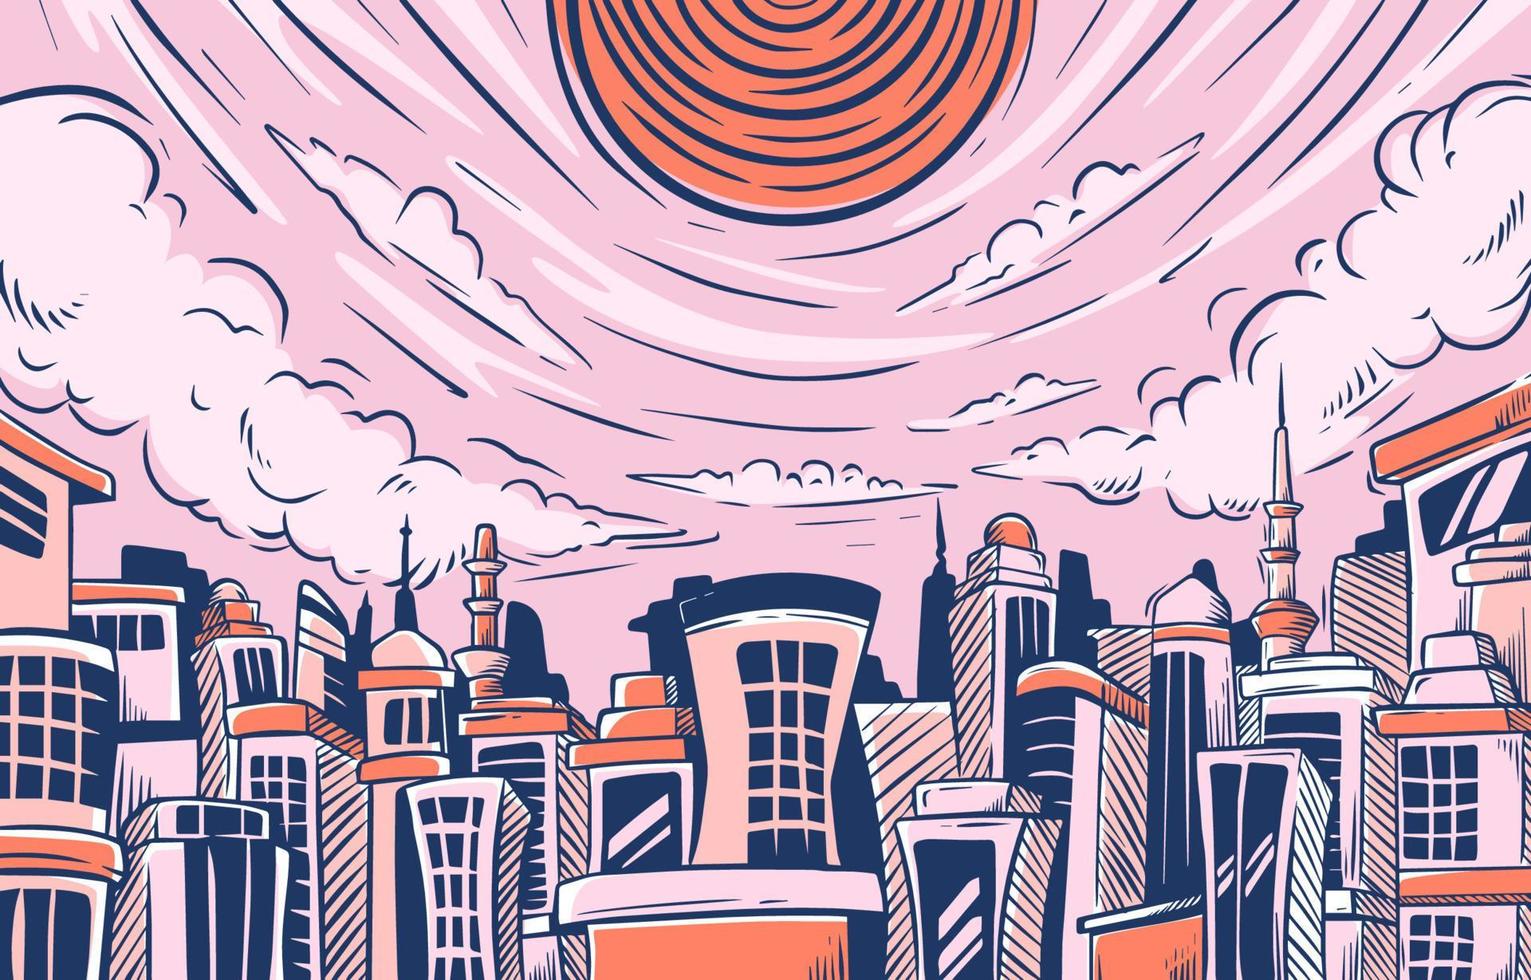 bosquejo rosa paisaje urbano dibujos animados dibujados a mano vector